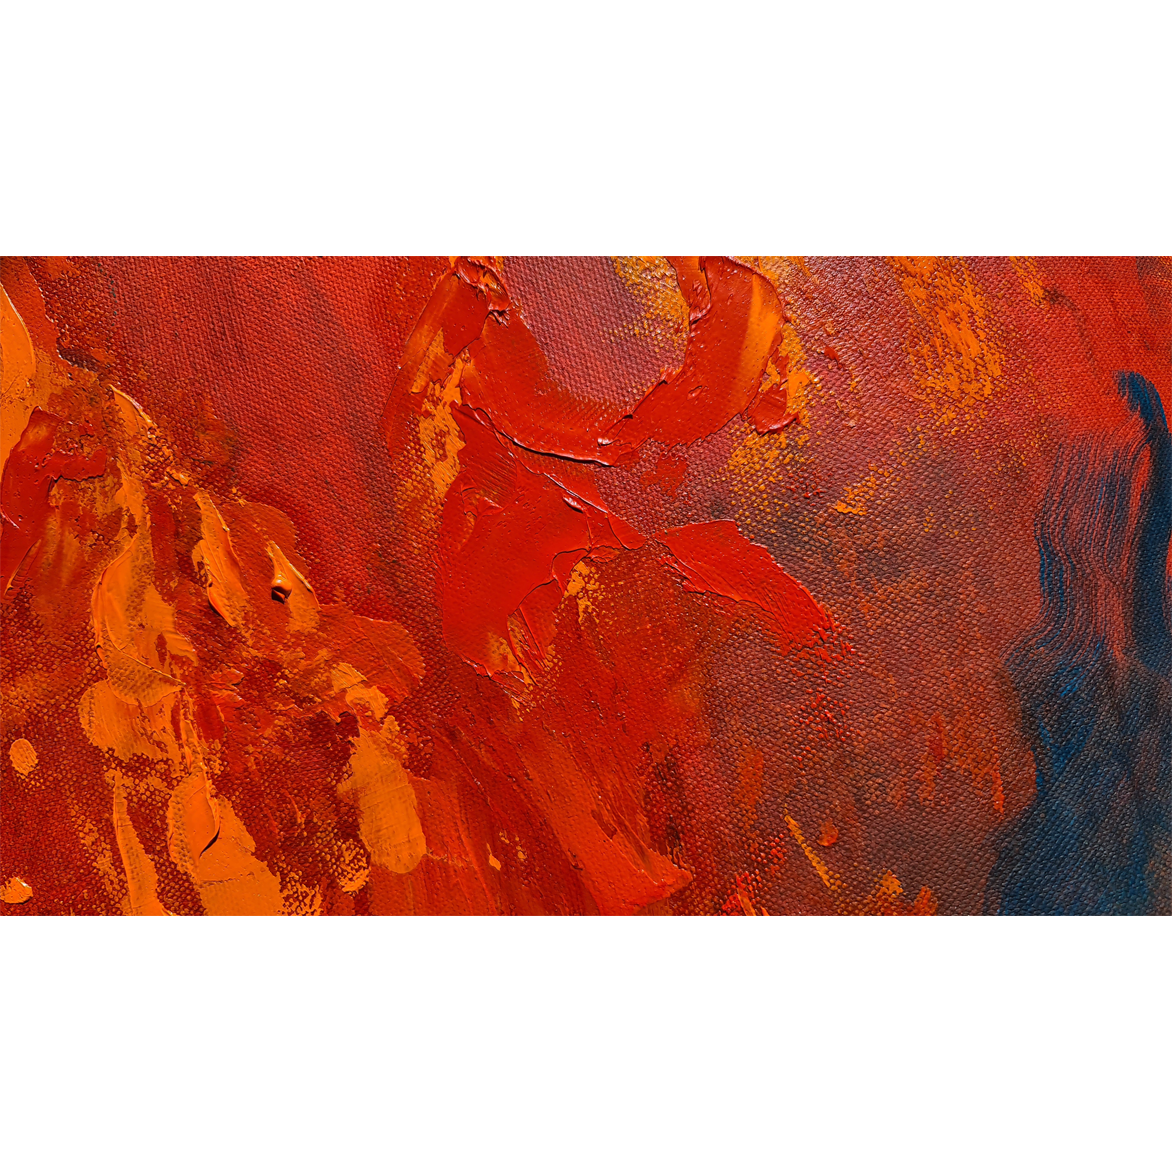 Fire, oil on canvas, spatula effect